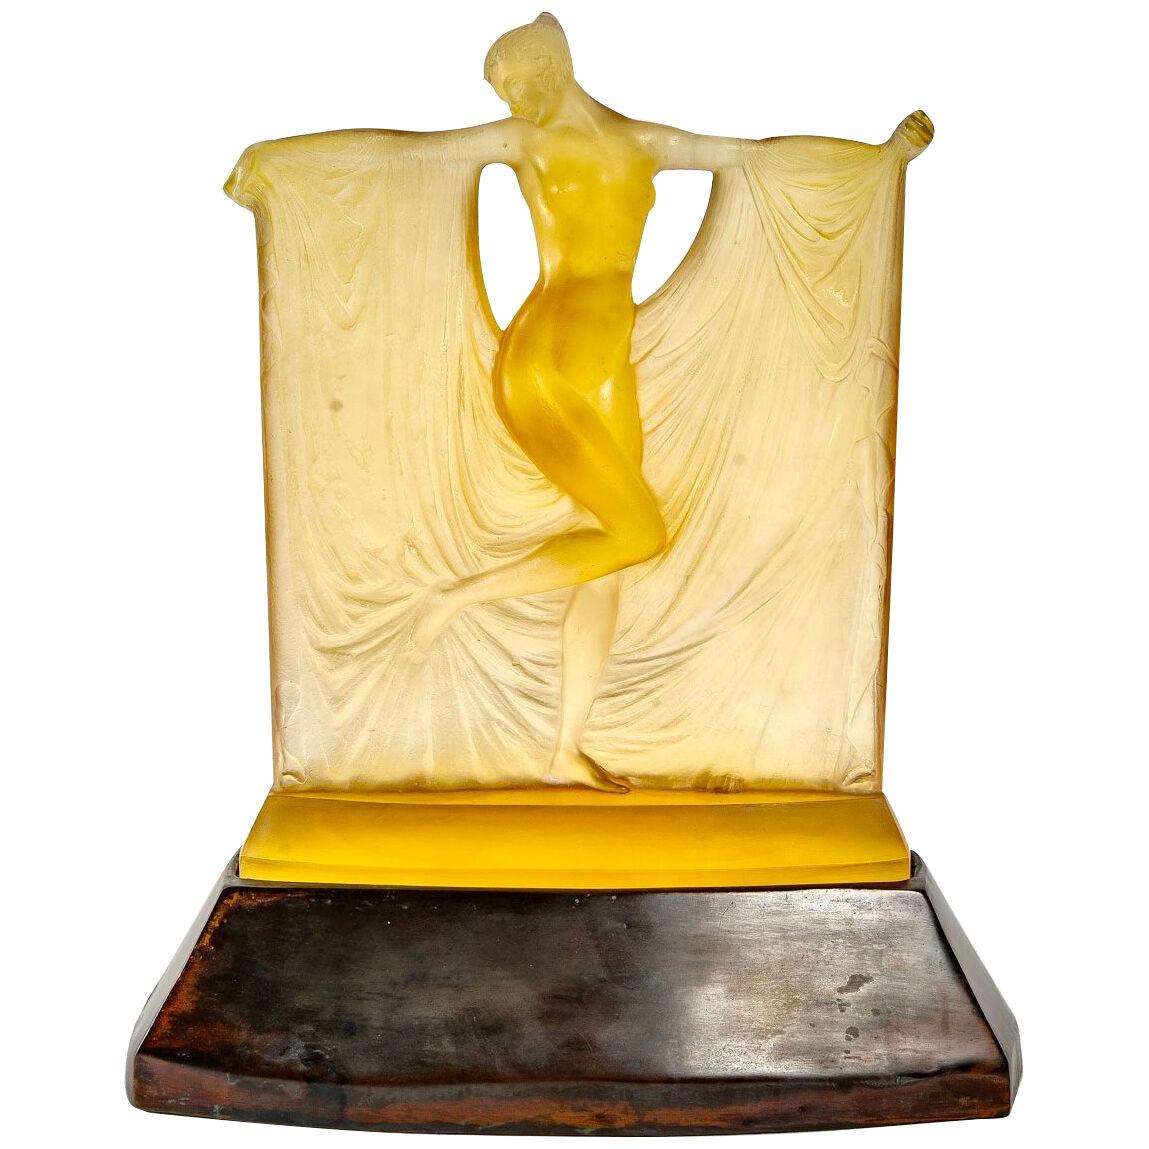 1925 René Lalique - Statuette "Suzanne" Yellow Amber Glass - Bronze Base